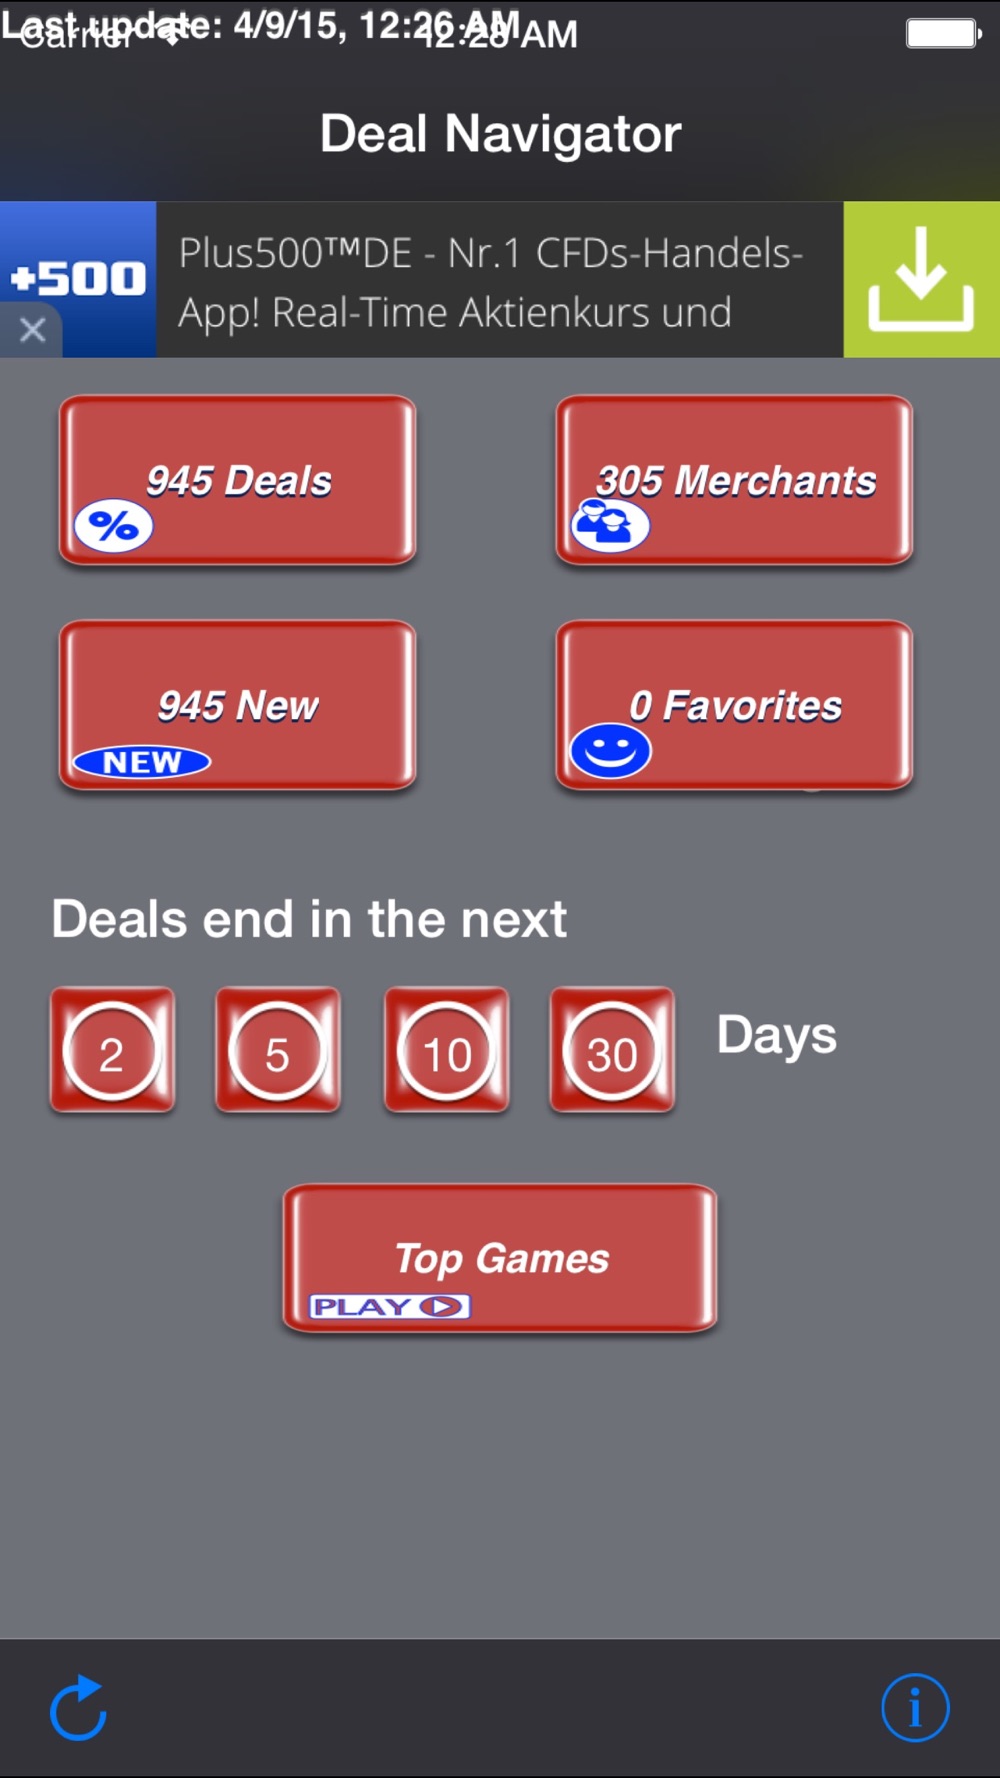 Deal Navigator - Coupon App - mega daily deals to save money Free Download App for iPhone - STEPrimo.com